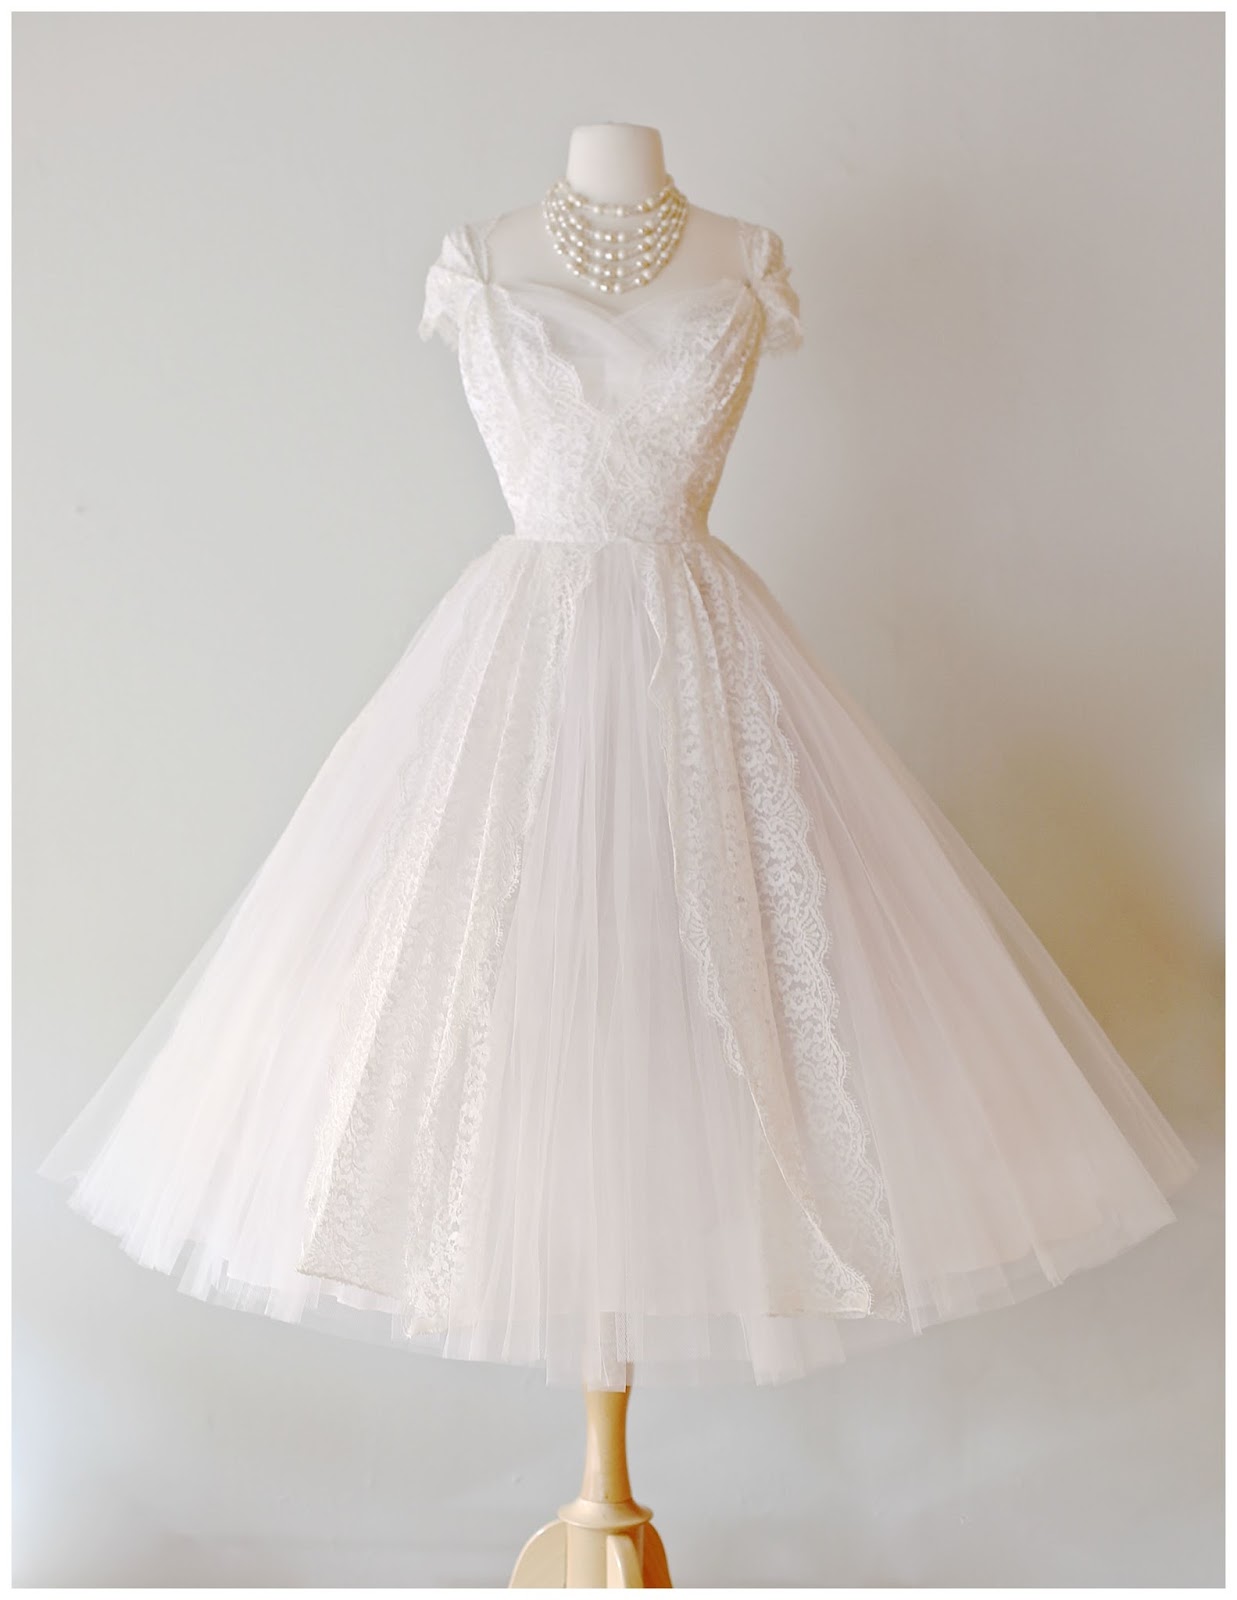 Xtabay Vintage Clothing Boutique - Portland, Oregon: Bridal Salon Update